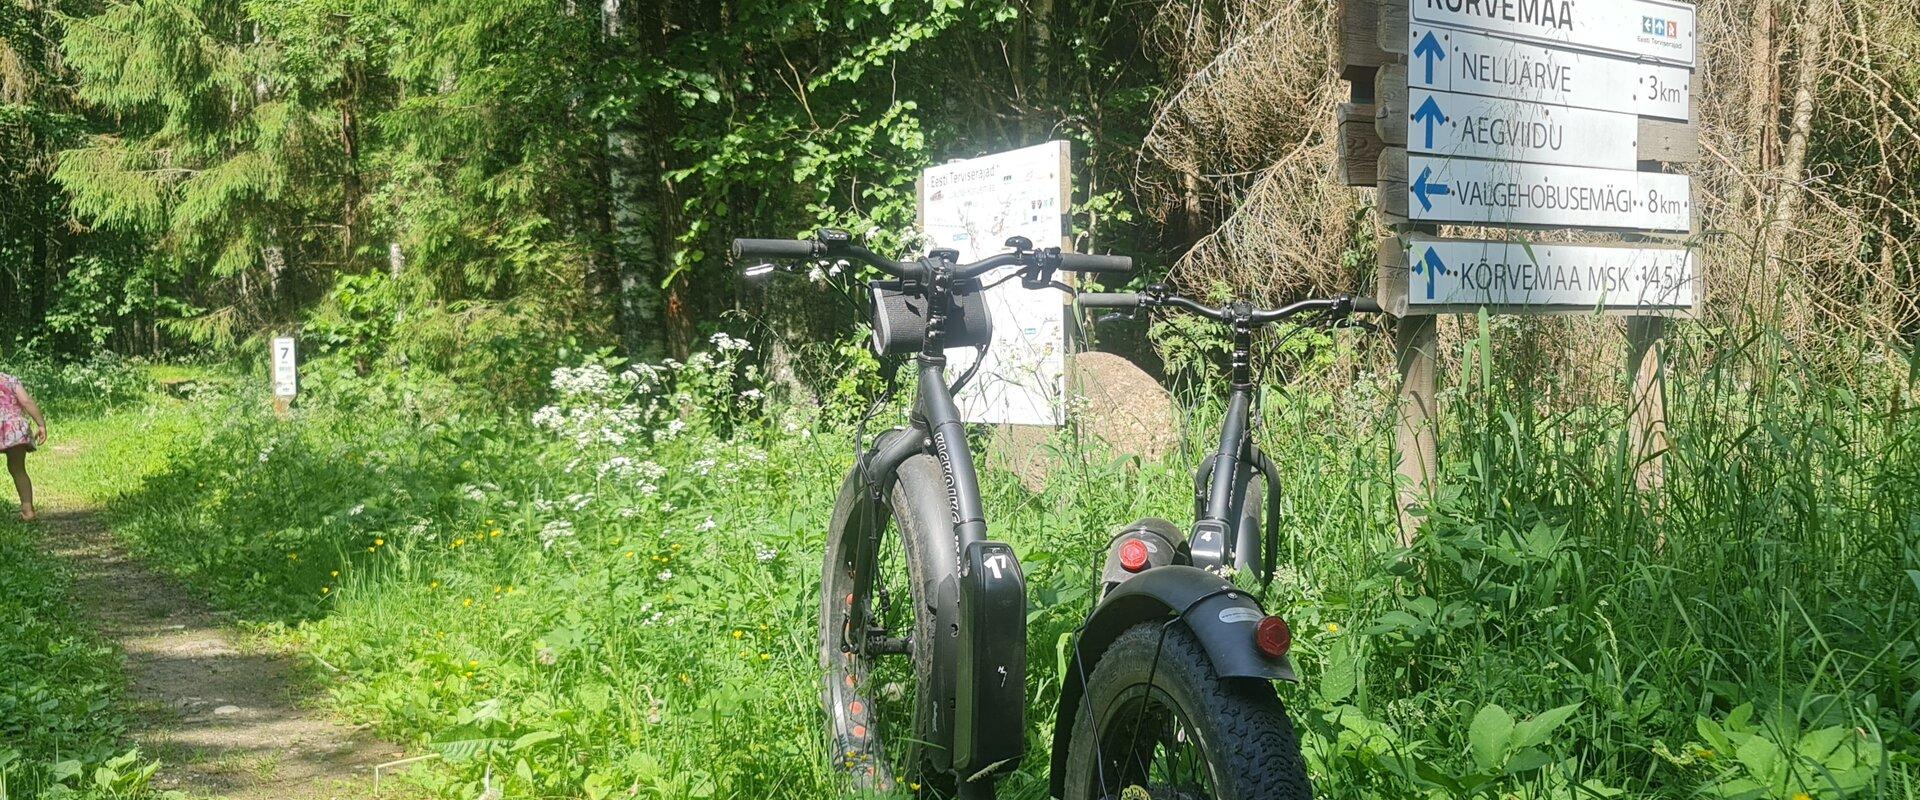 E- Bike elektrirattamatk Nelijärve ja Aegviidu radadel